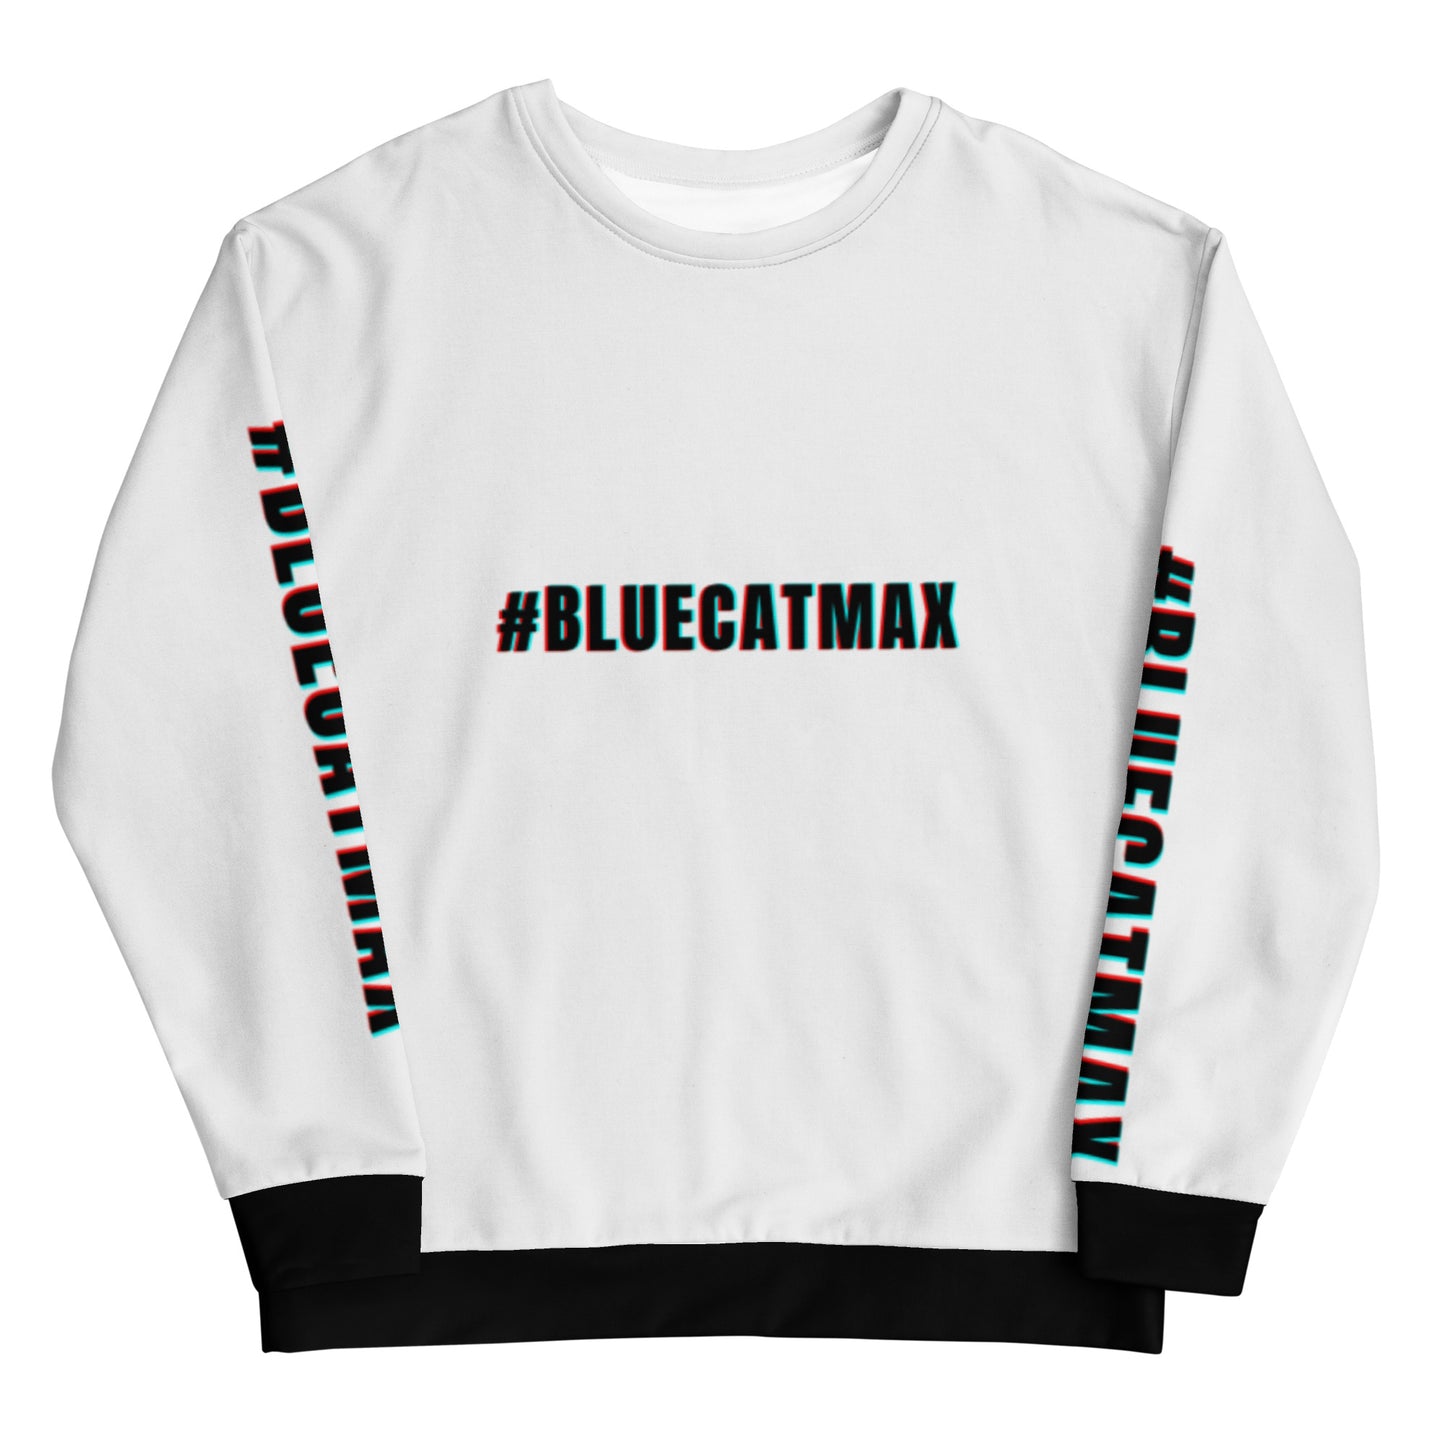 #bluecatmax Bestseller Premium Unisex Sweatshirt XS-3XL